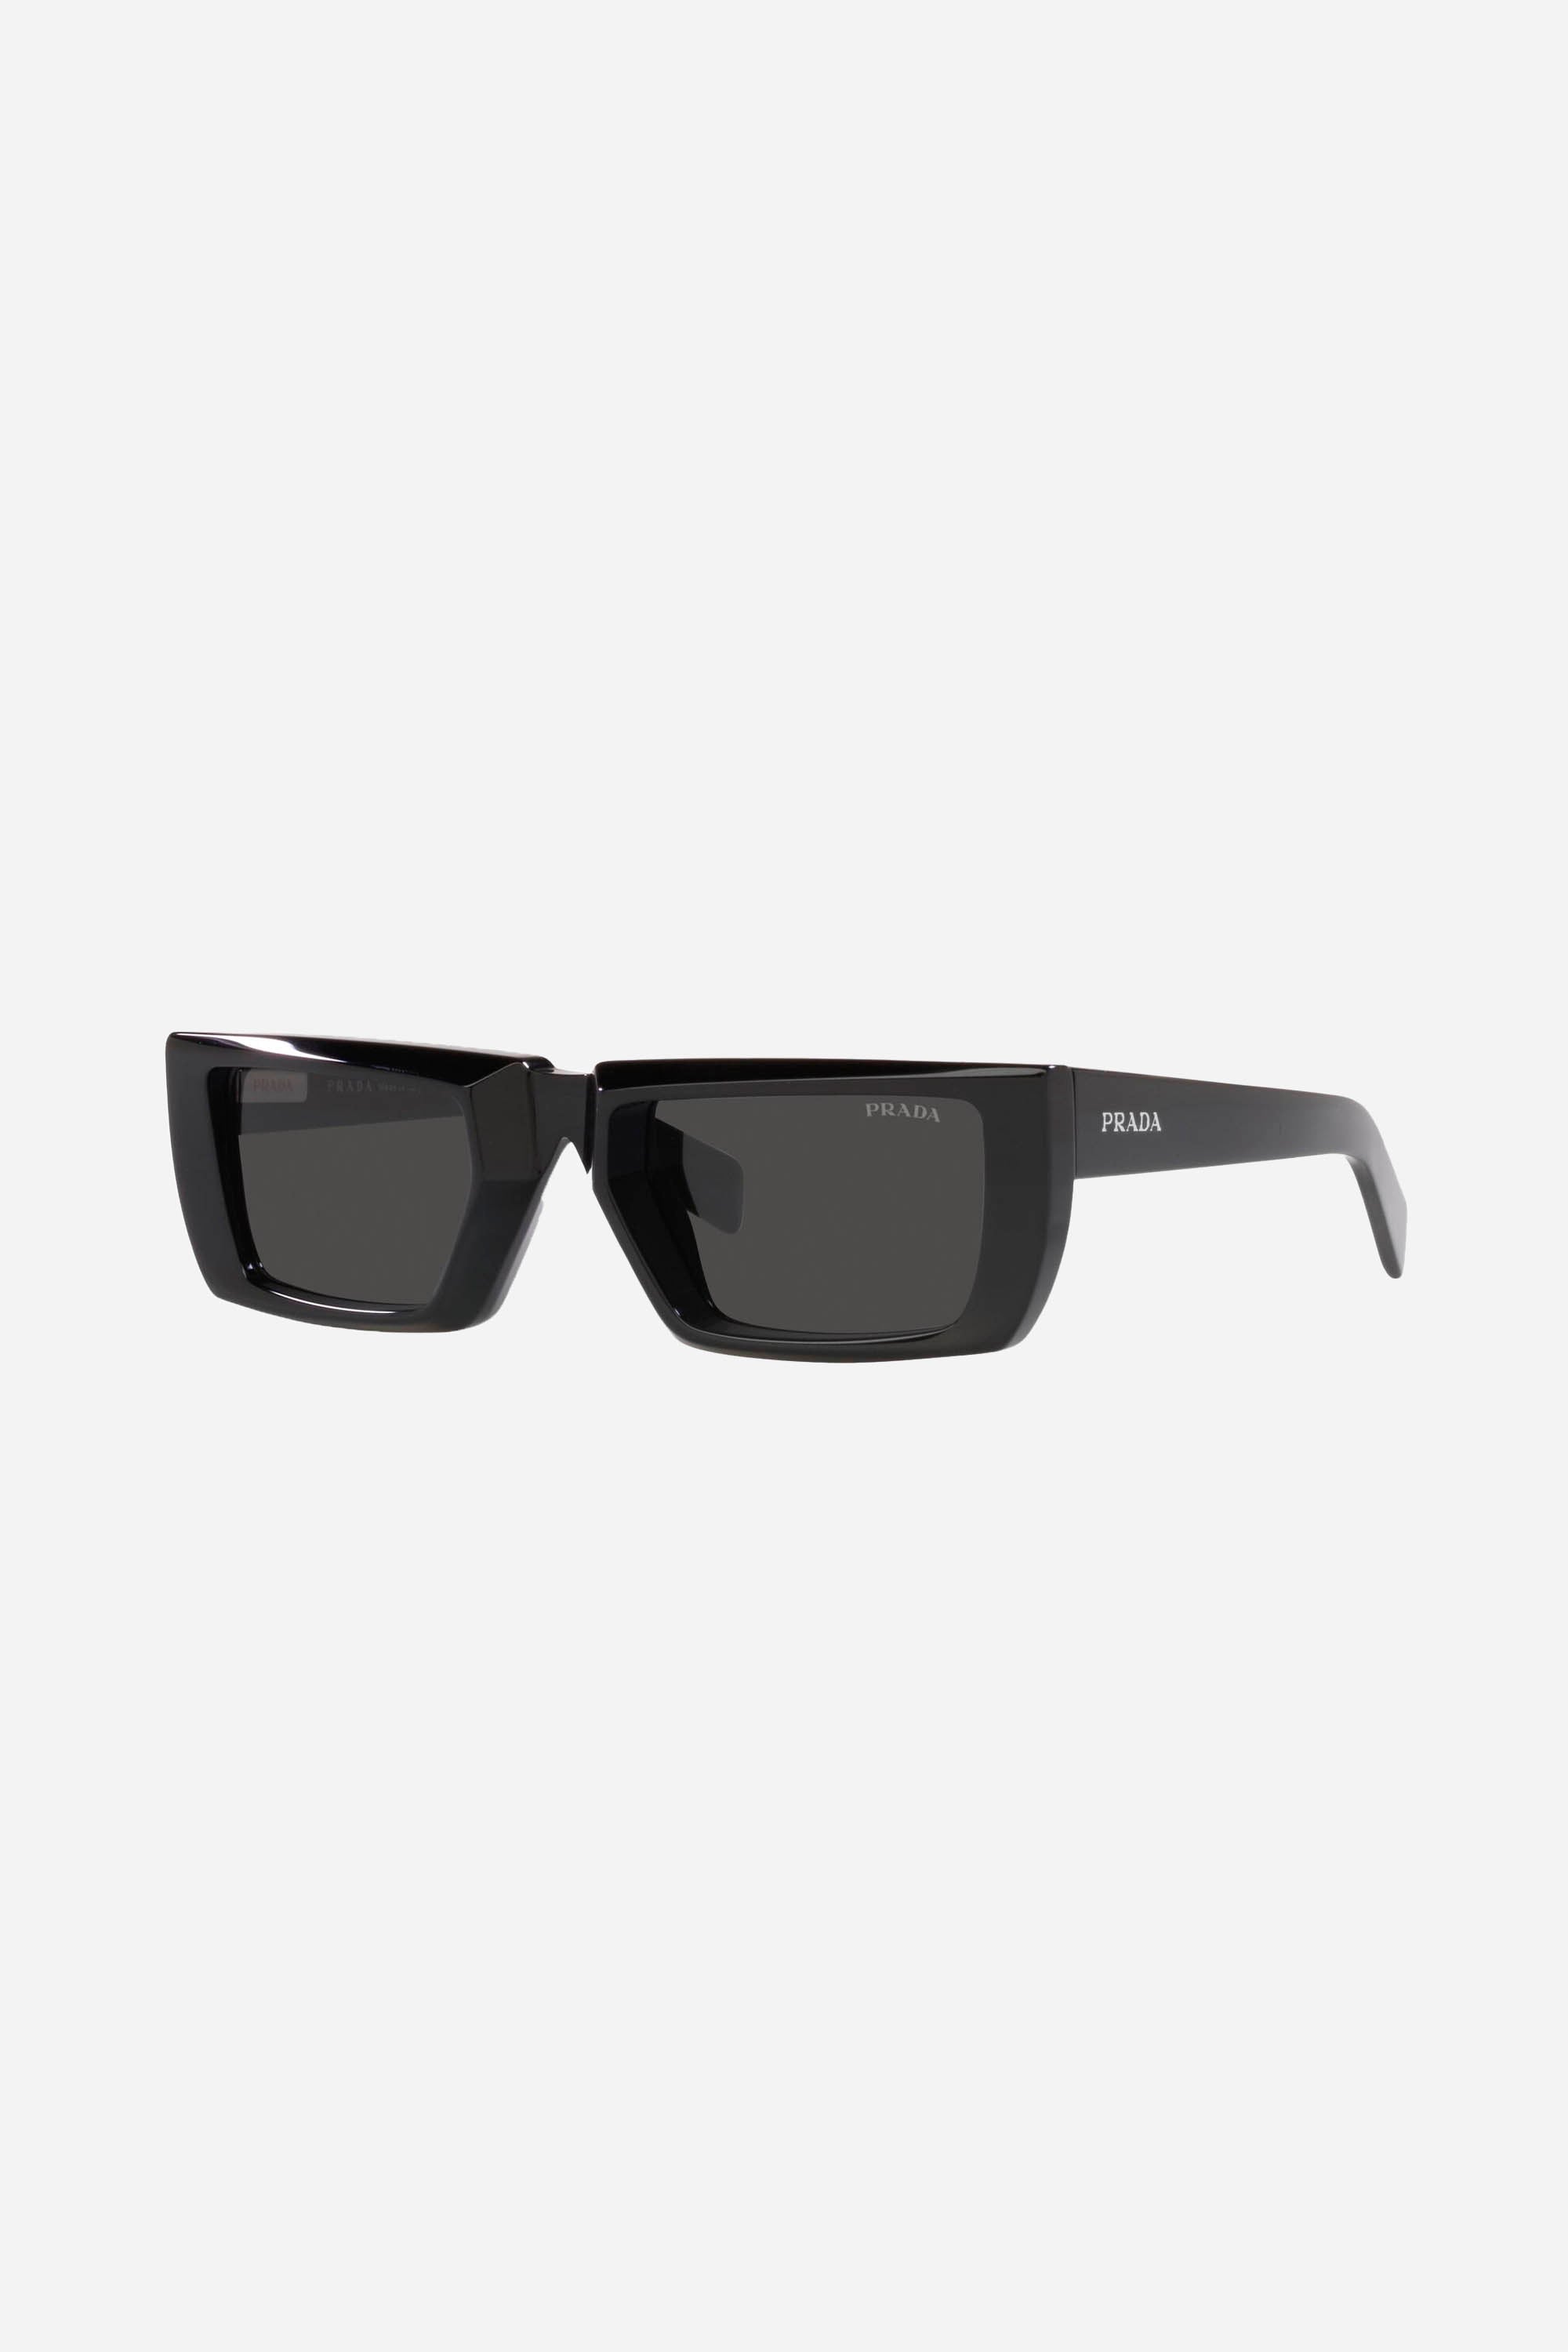 Prada runway squared black sunglasses - Eyewear Club